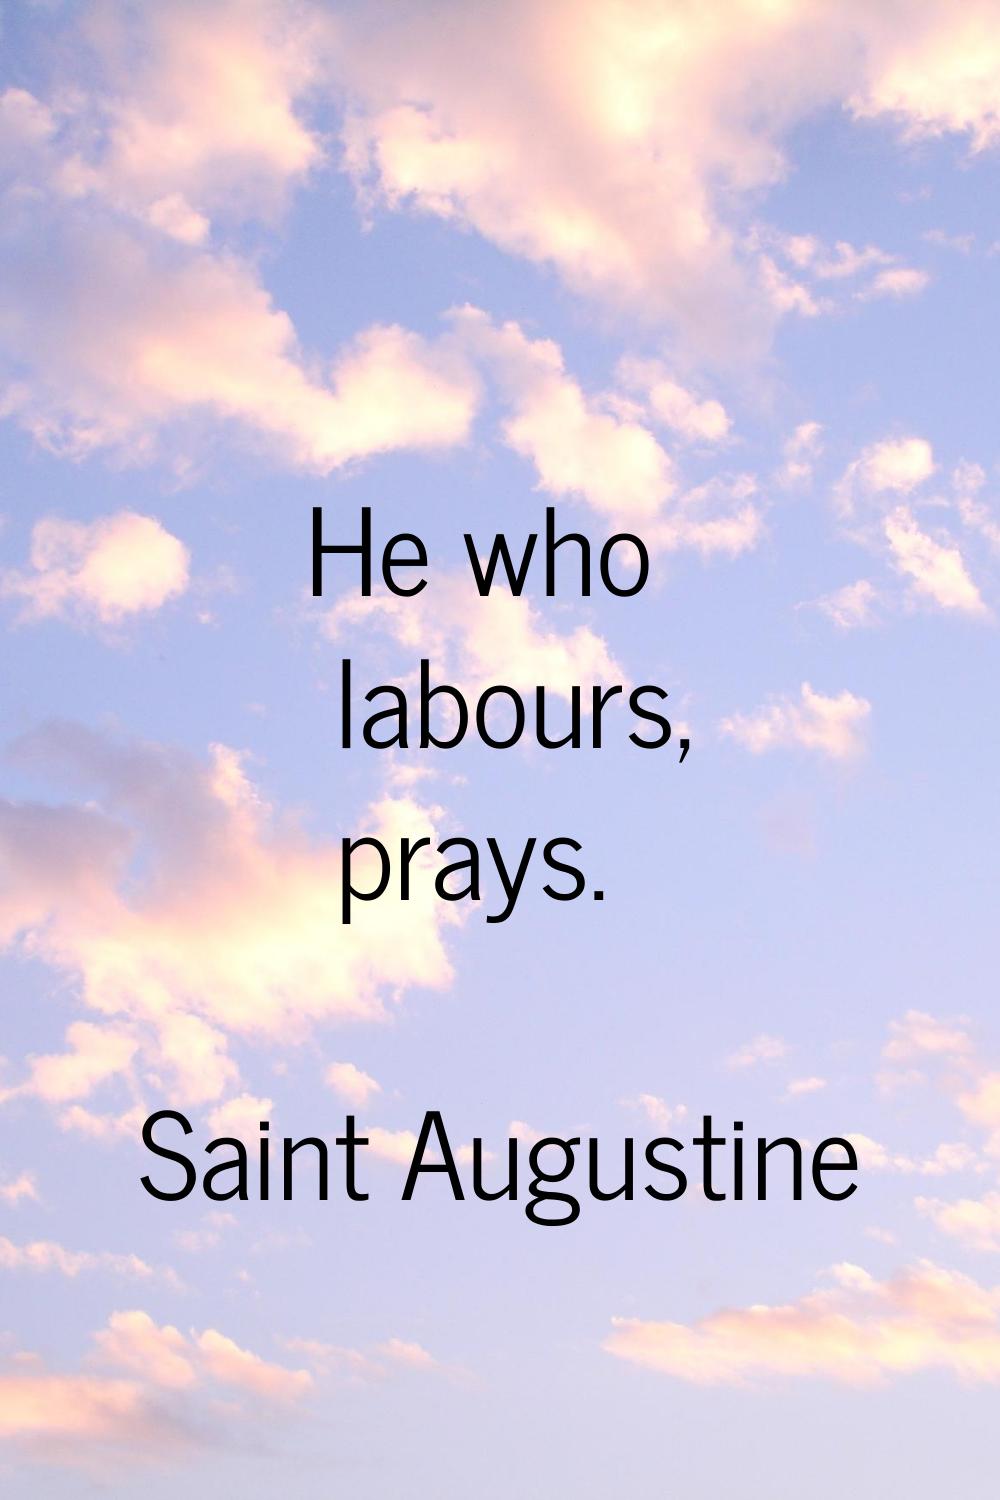 He who labours, prays.